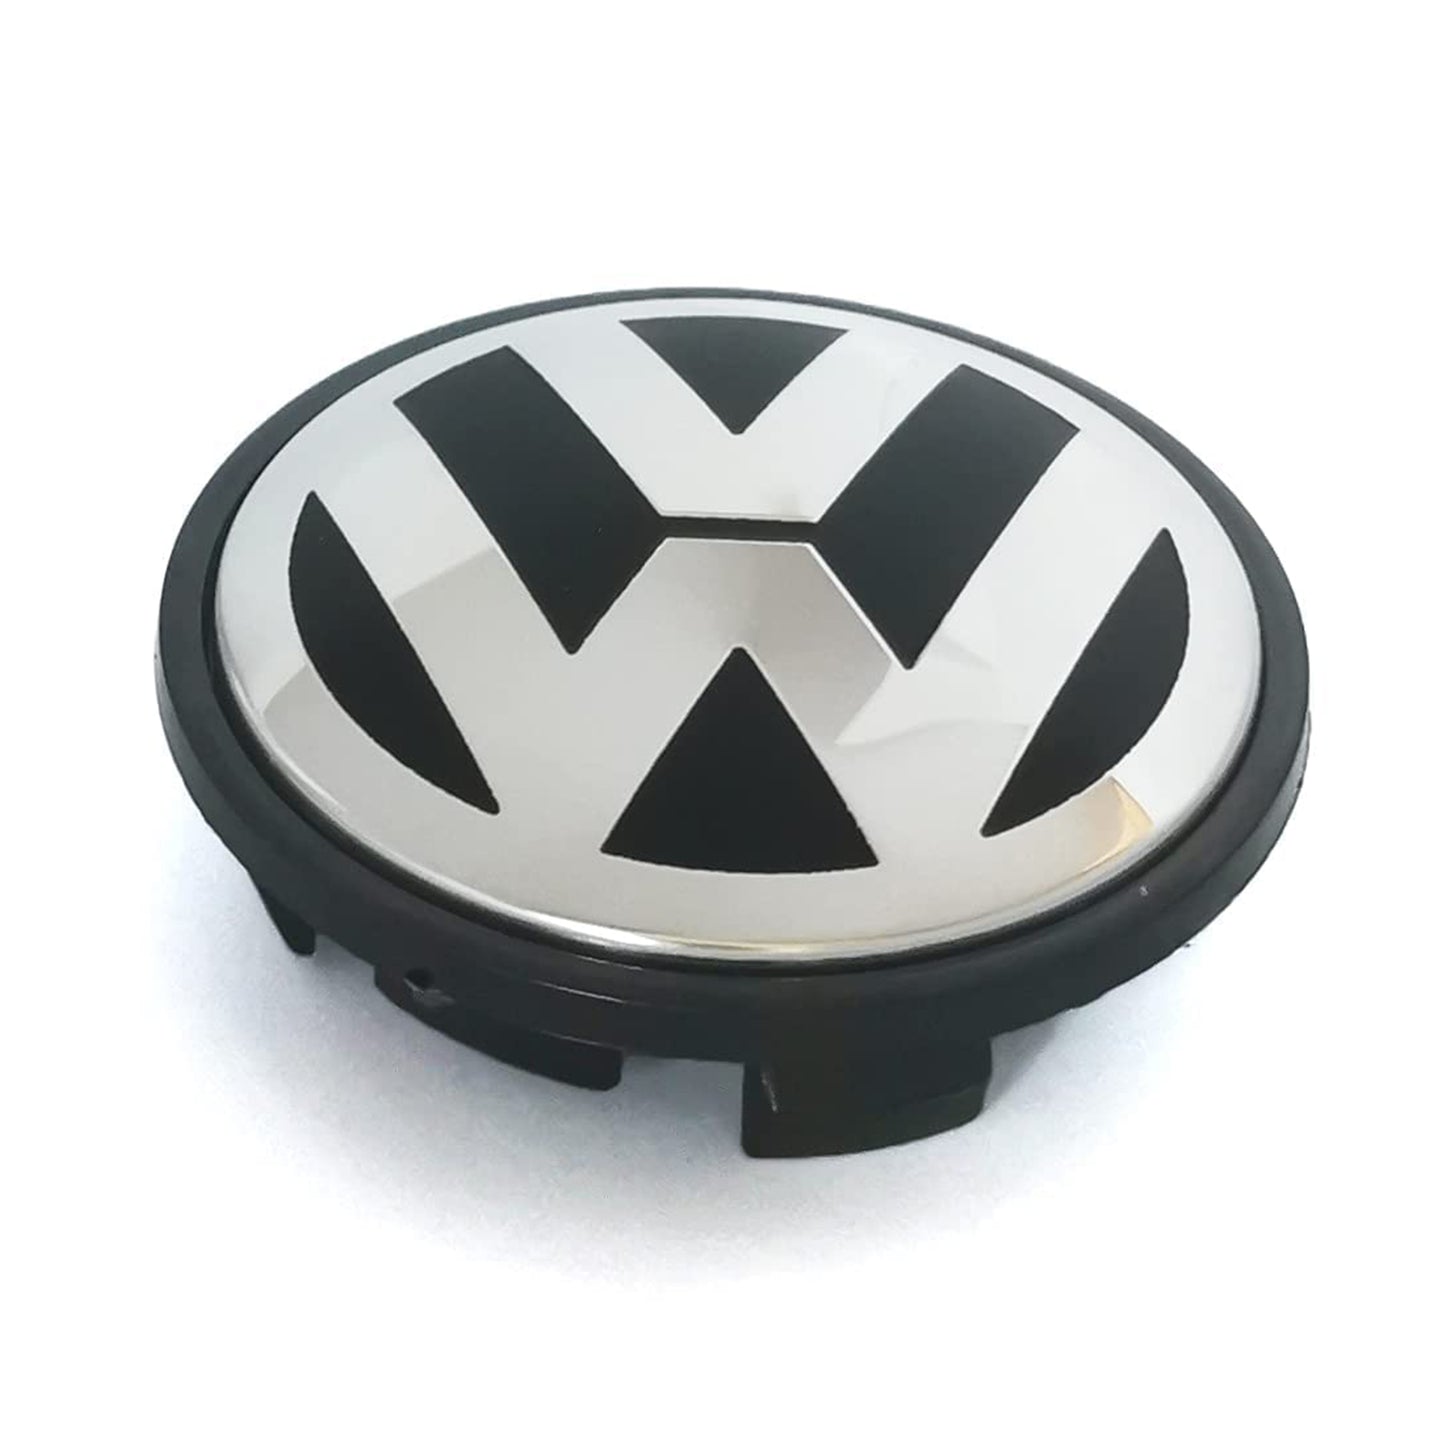 2004-2017 Volkswagen VW Touareg 3" Center Caps 77mm Black Chrome Hub Caps